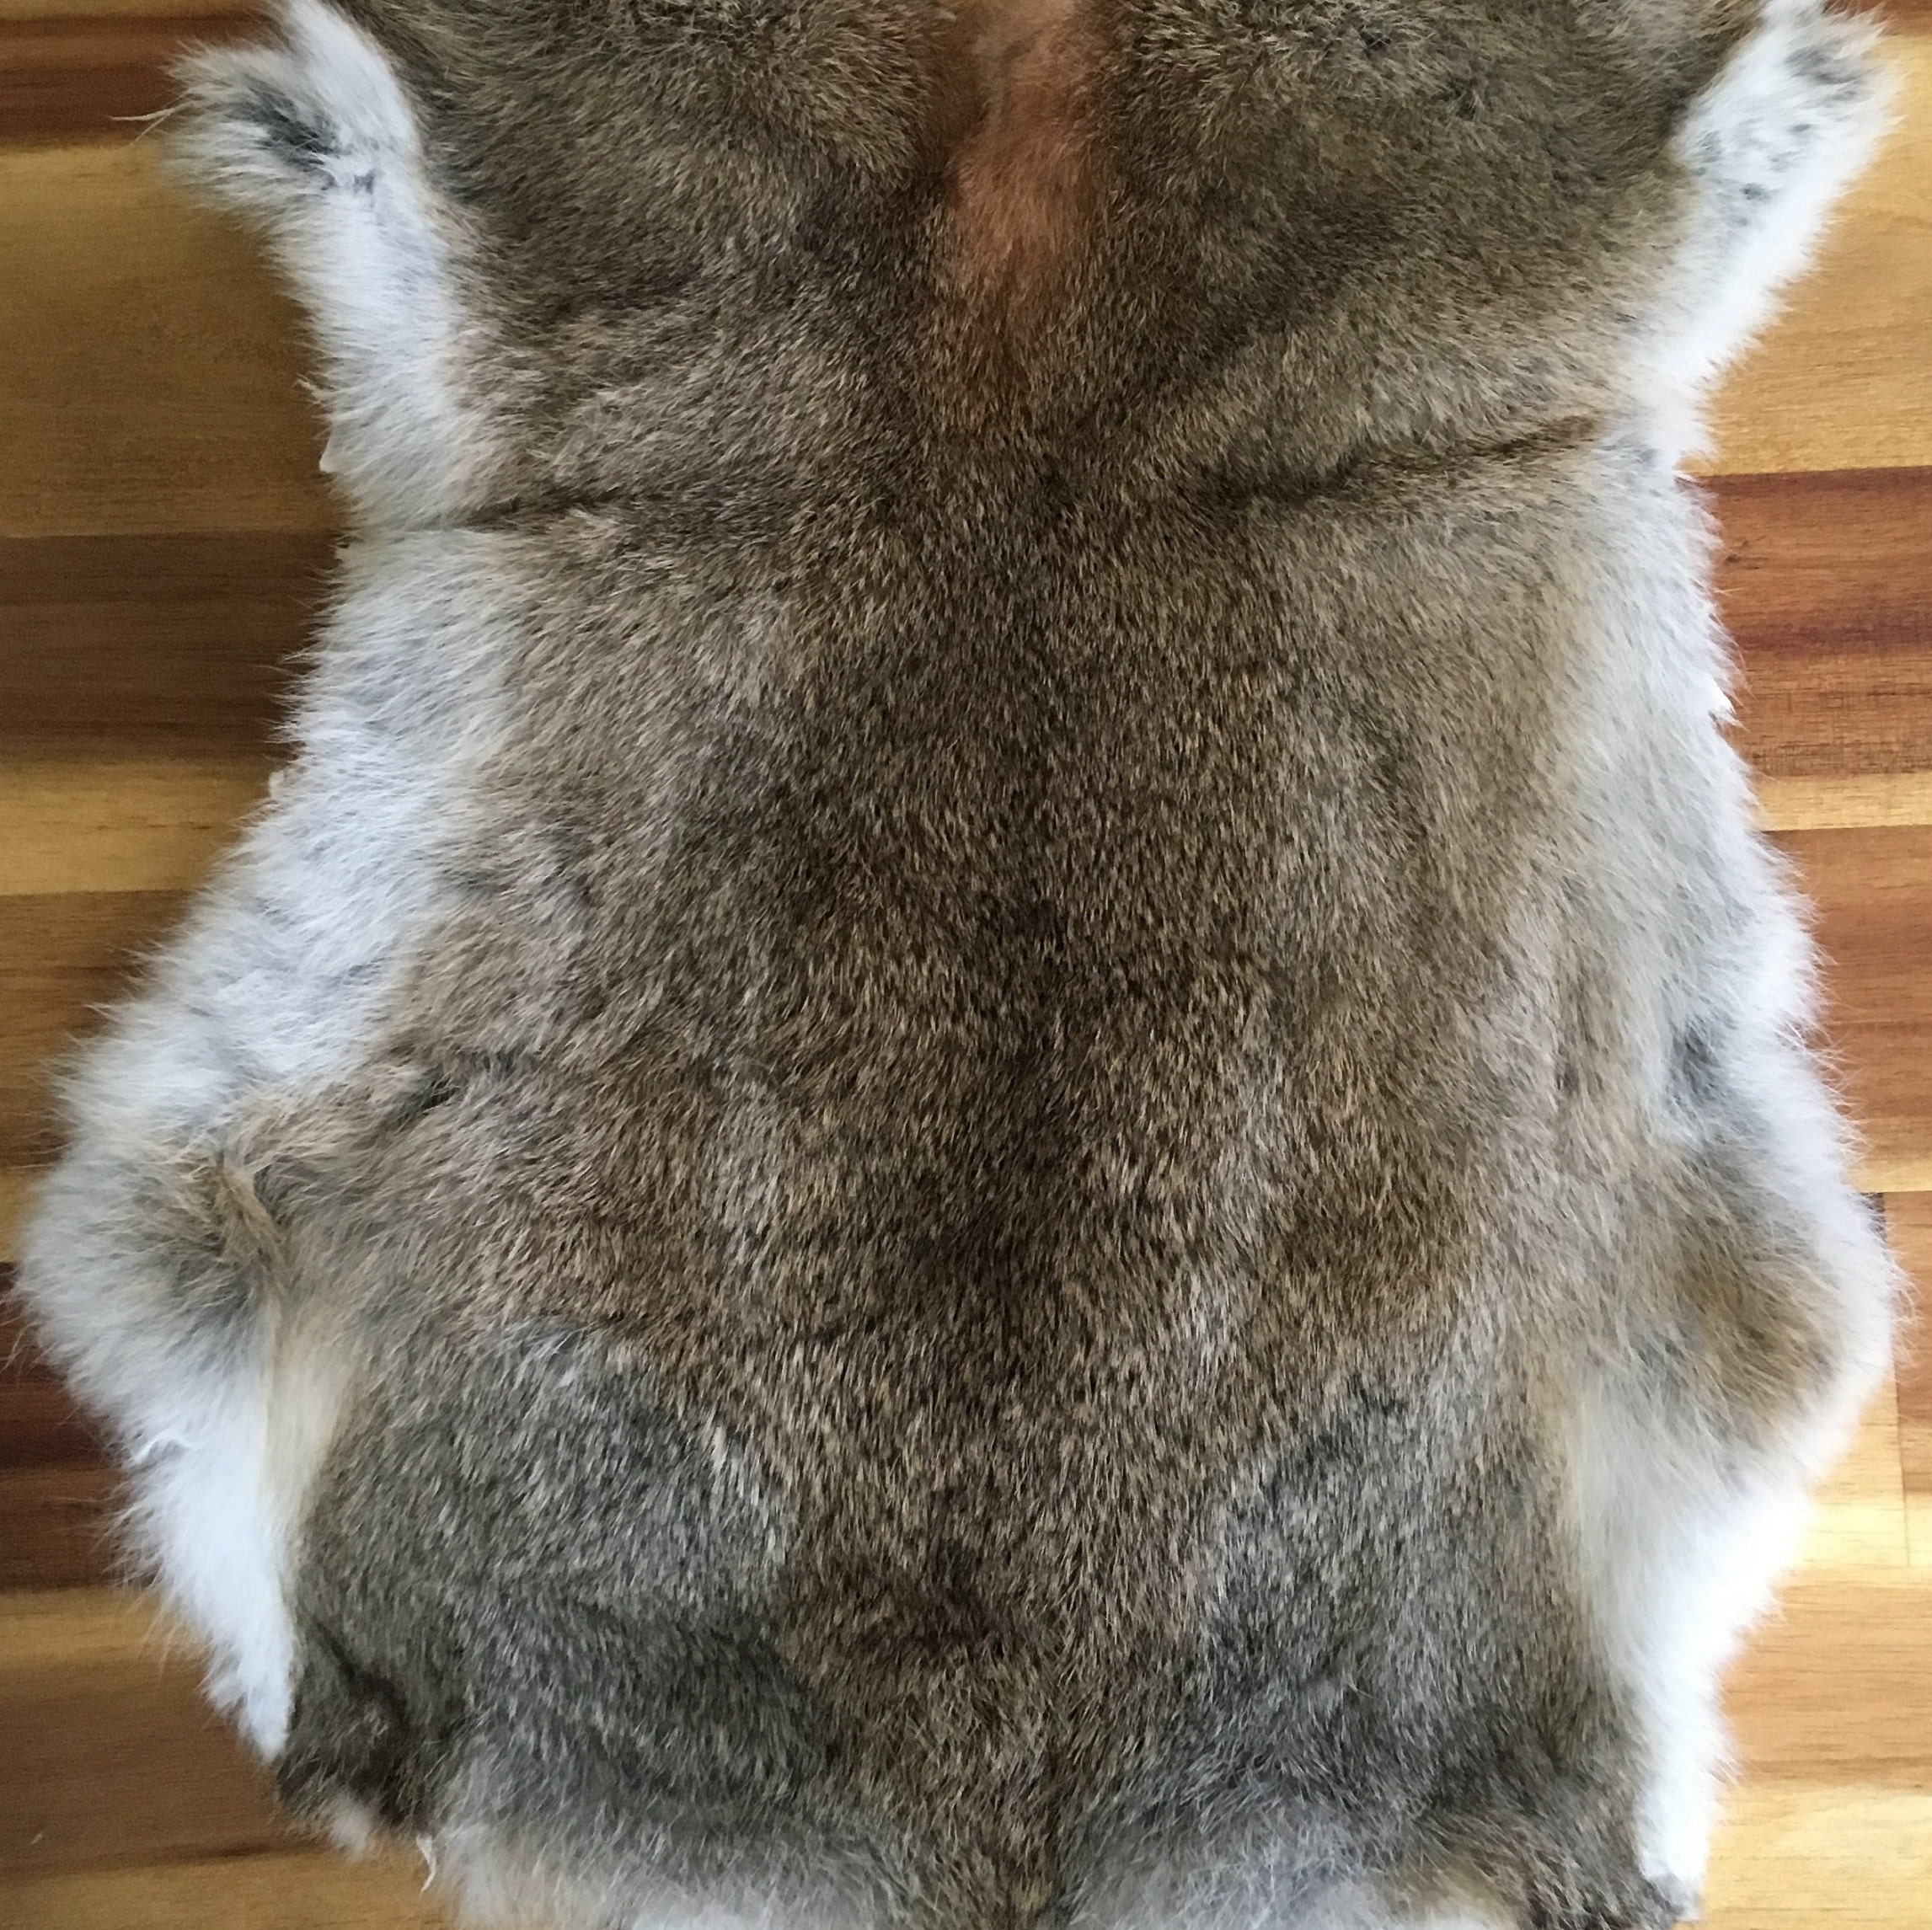 1x Wild Meadow Rabbit Skin Fur Pelt Tanned For Animal